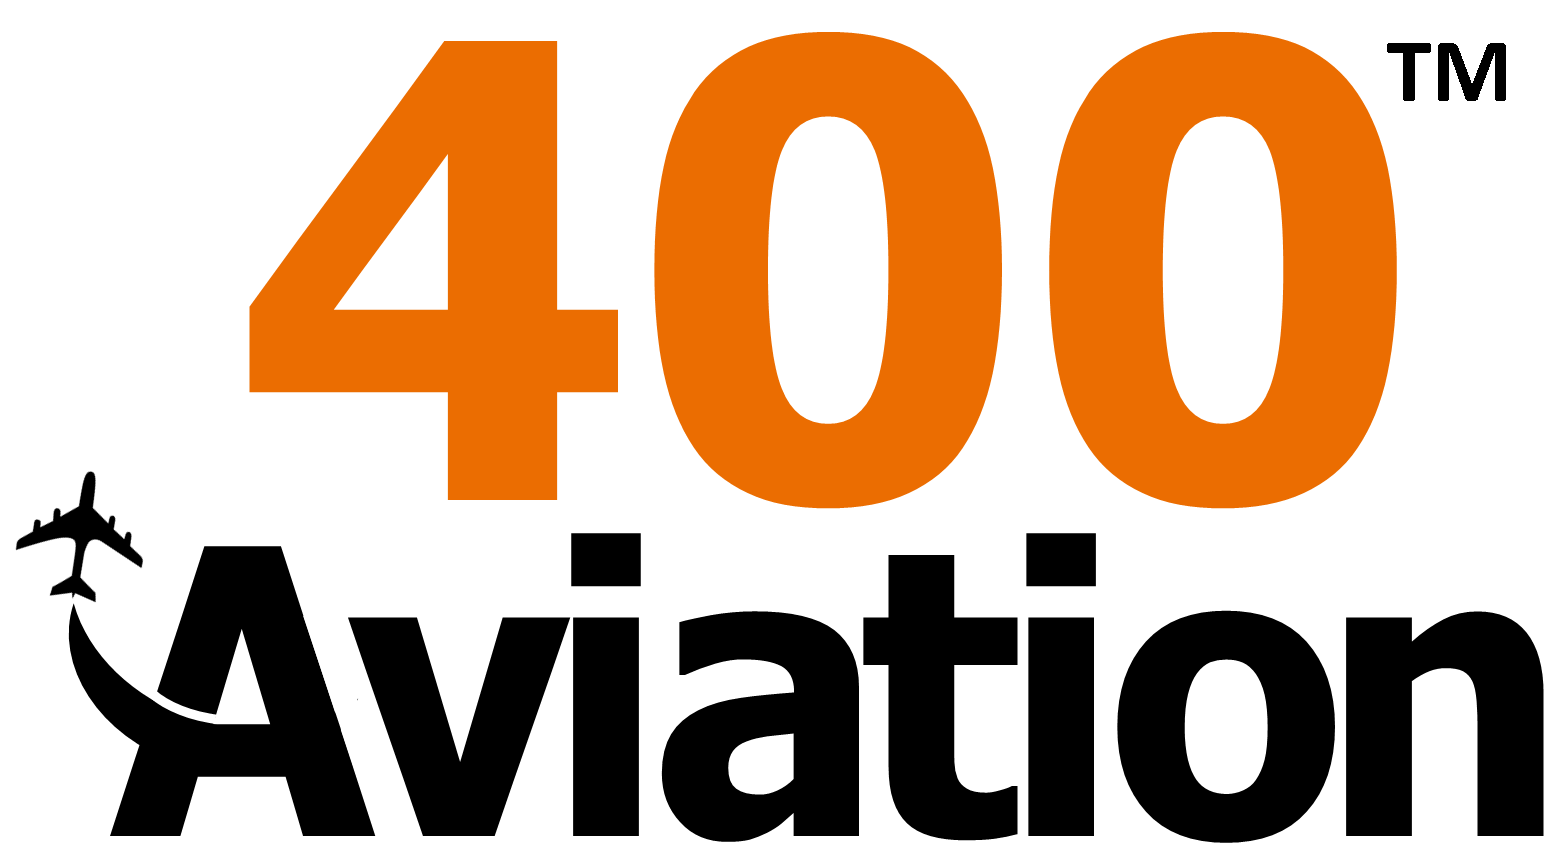 400 Aviation
Keywords: 400 Aviation